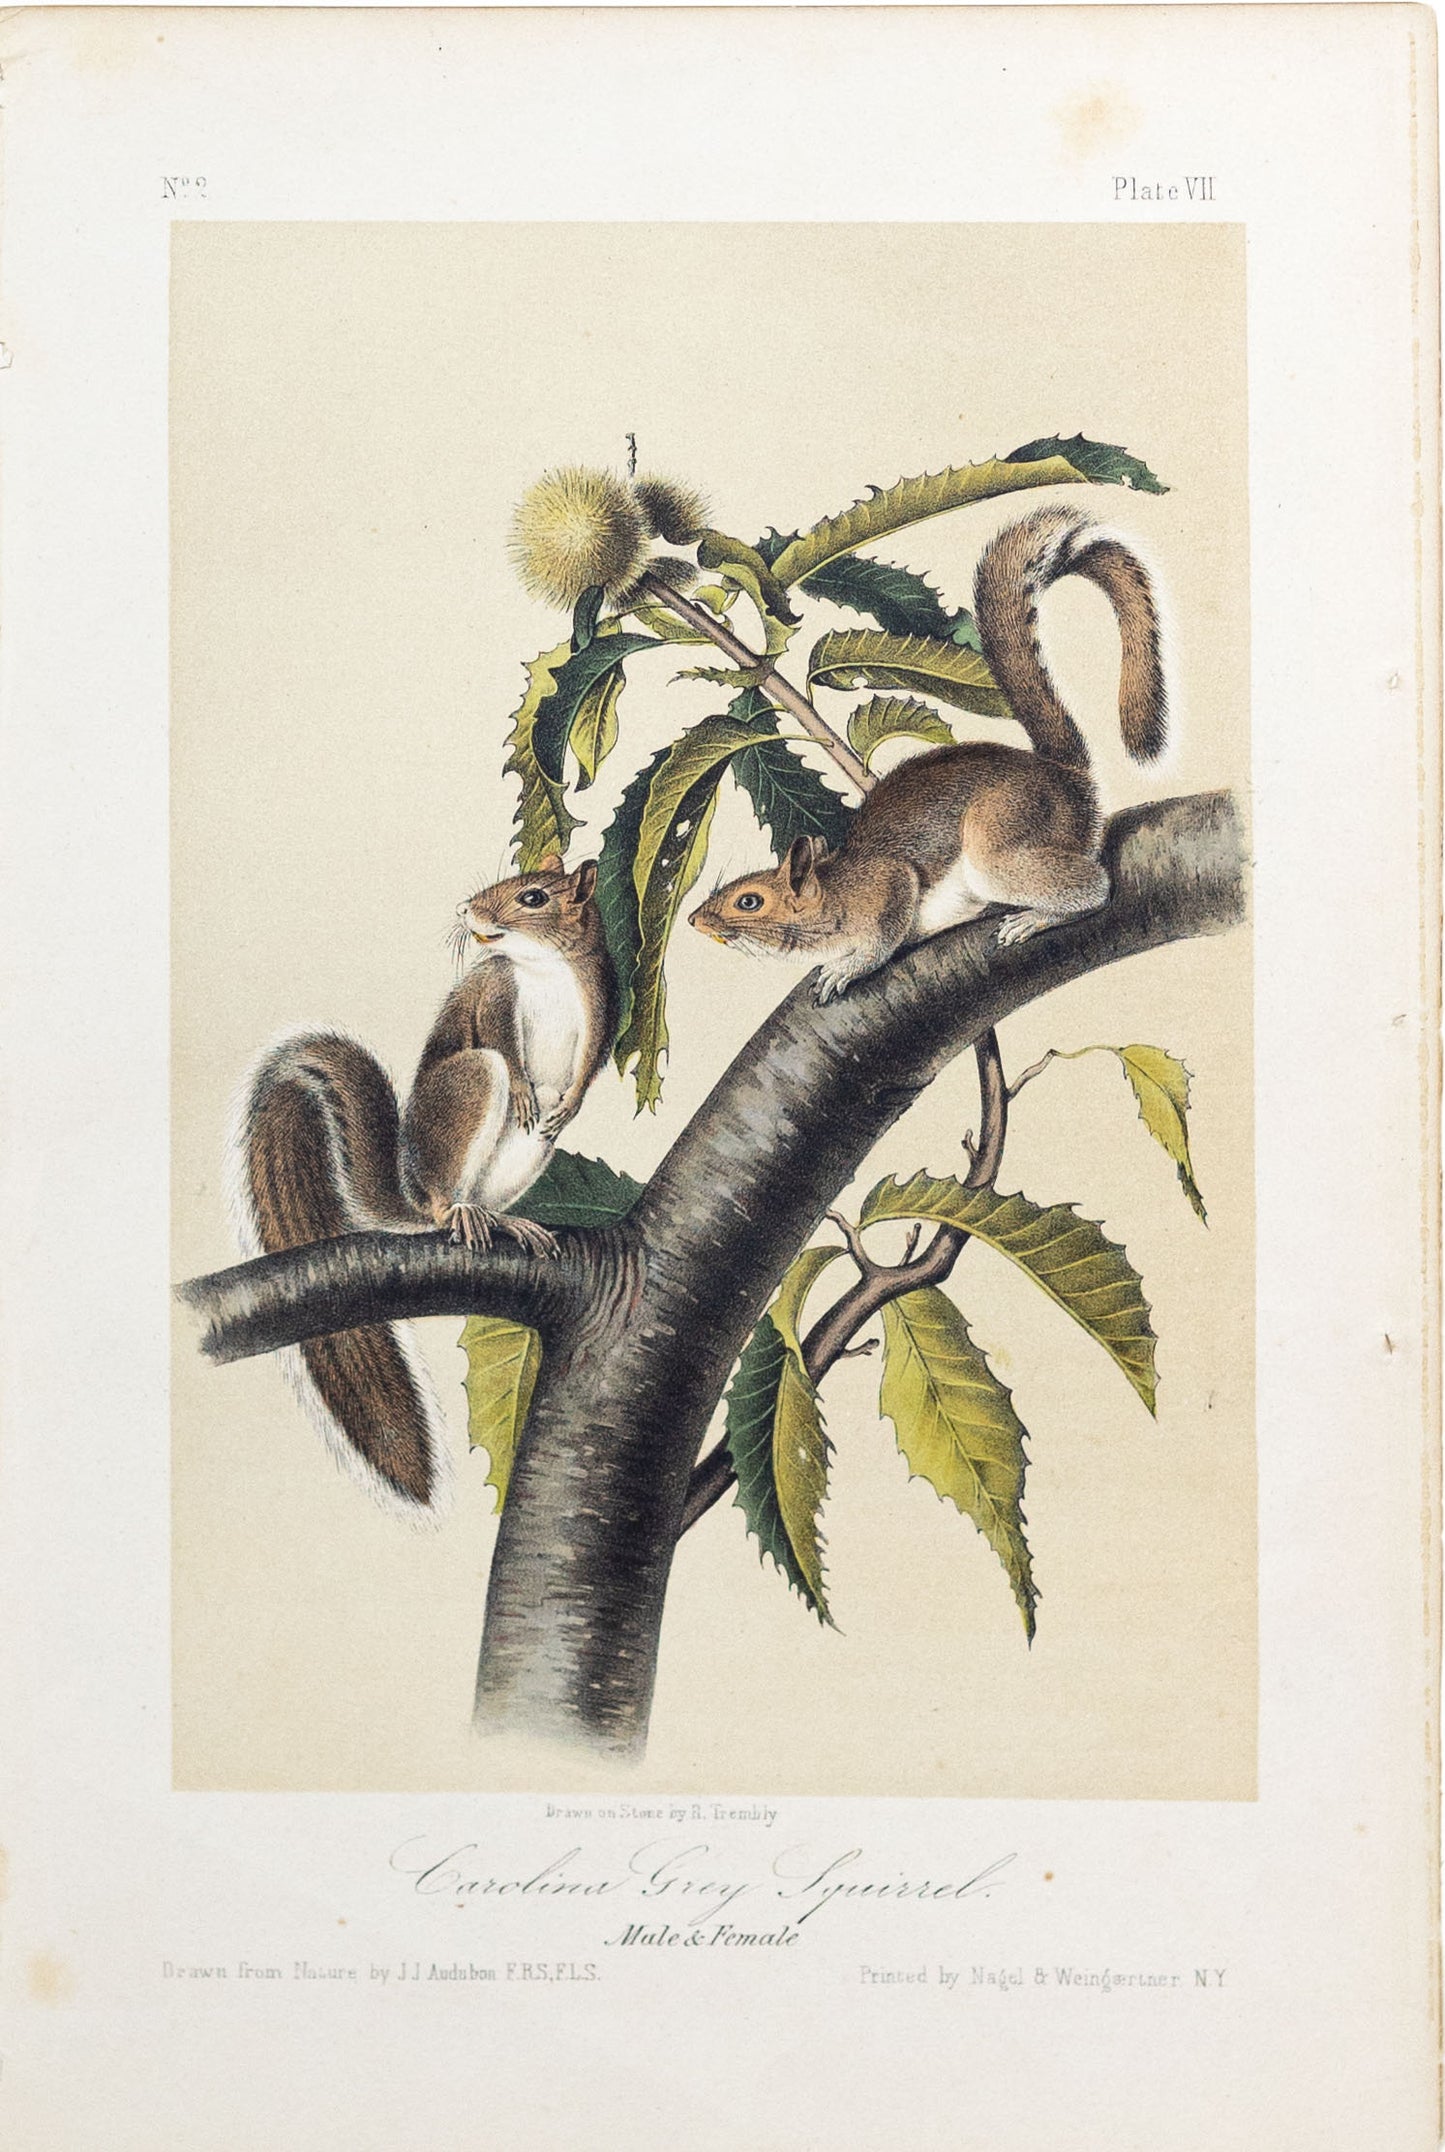 John James Audubon (1785-1851) Carolina Grey Squirrel, Male & Female, Plate 7, Octavo